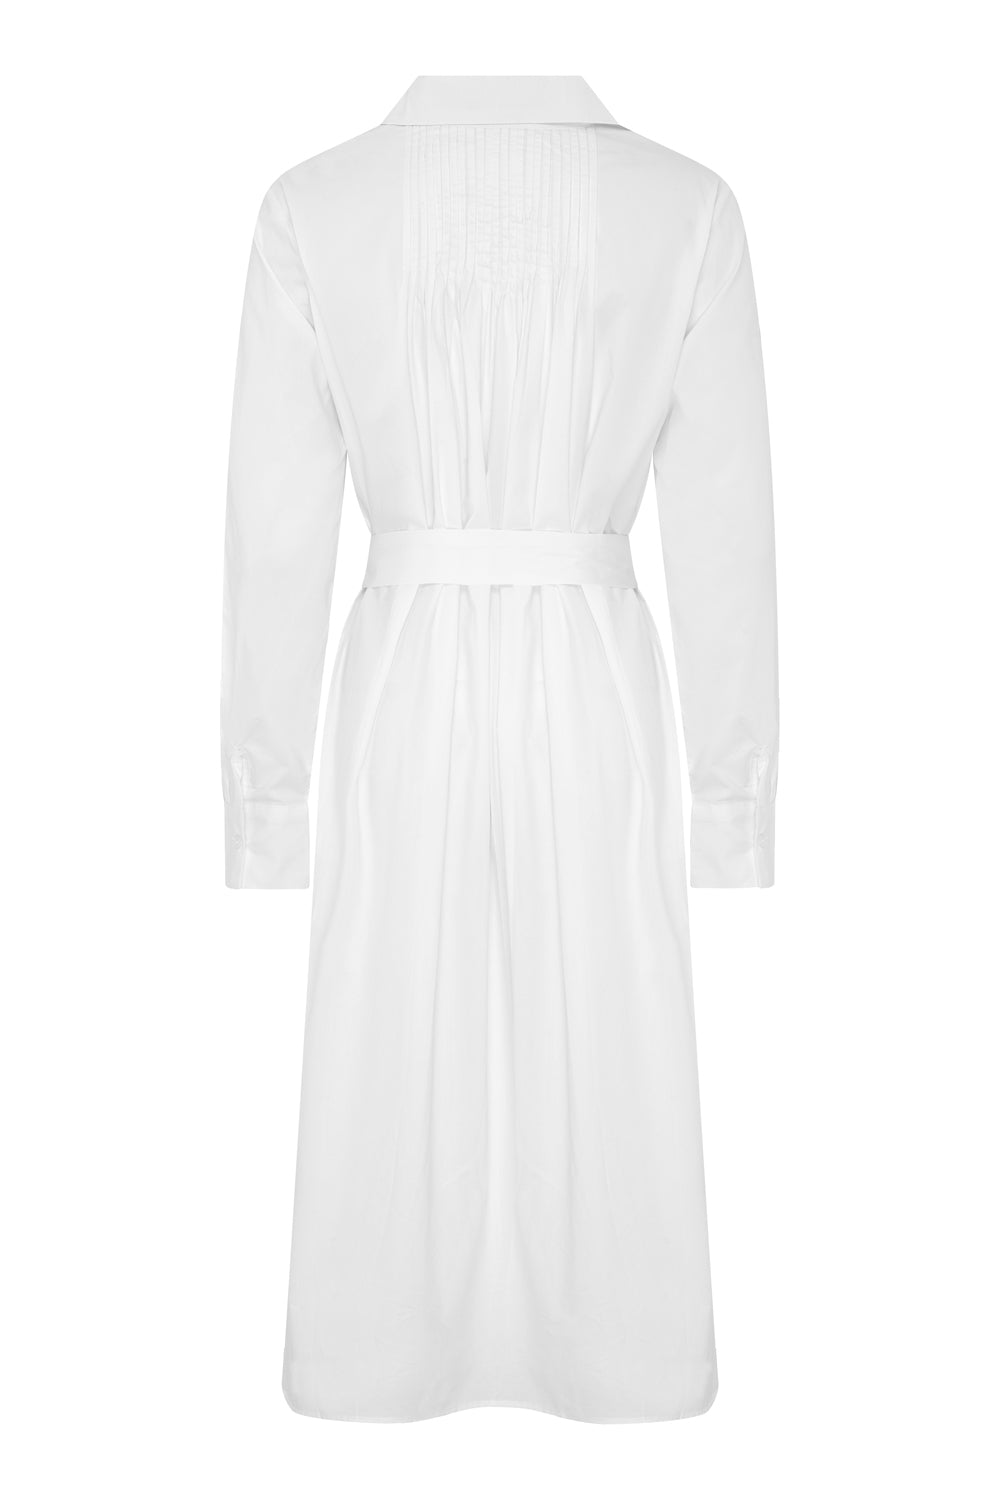 Cotton Pin Tuck Shirt Dress (White)